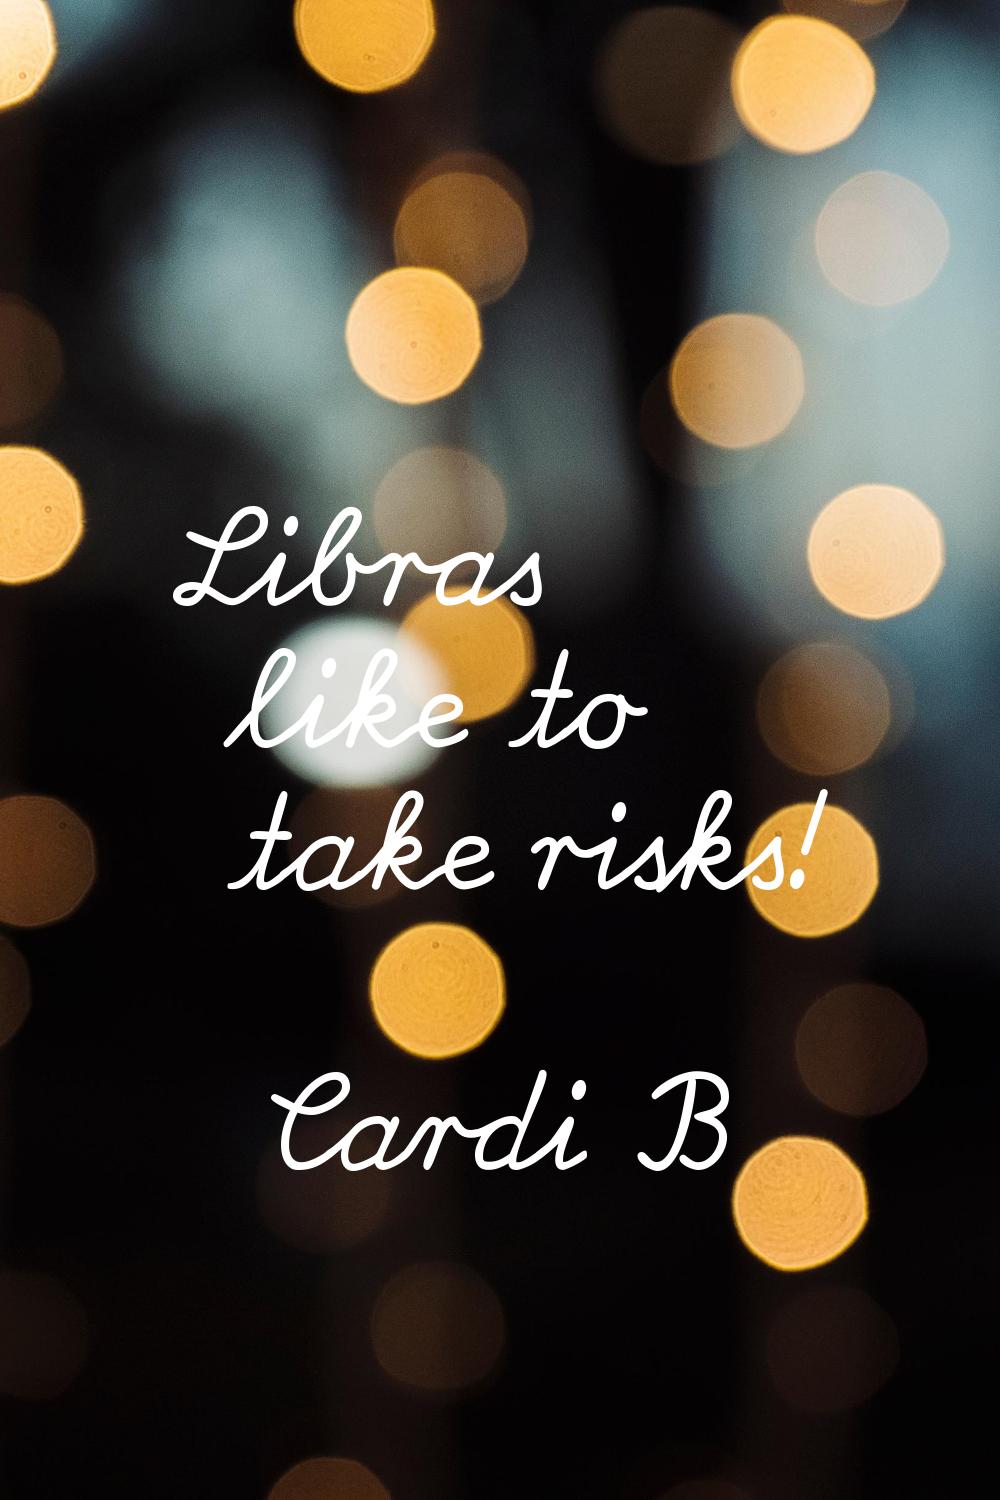 Libras like to take risks!